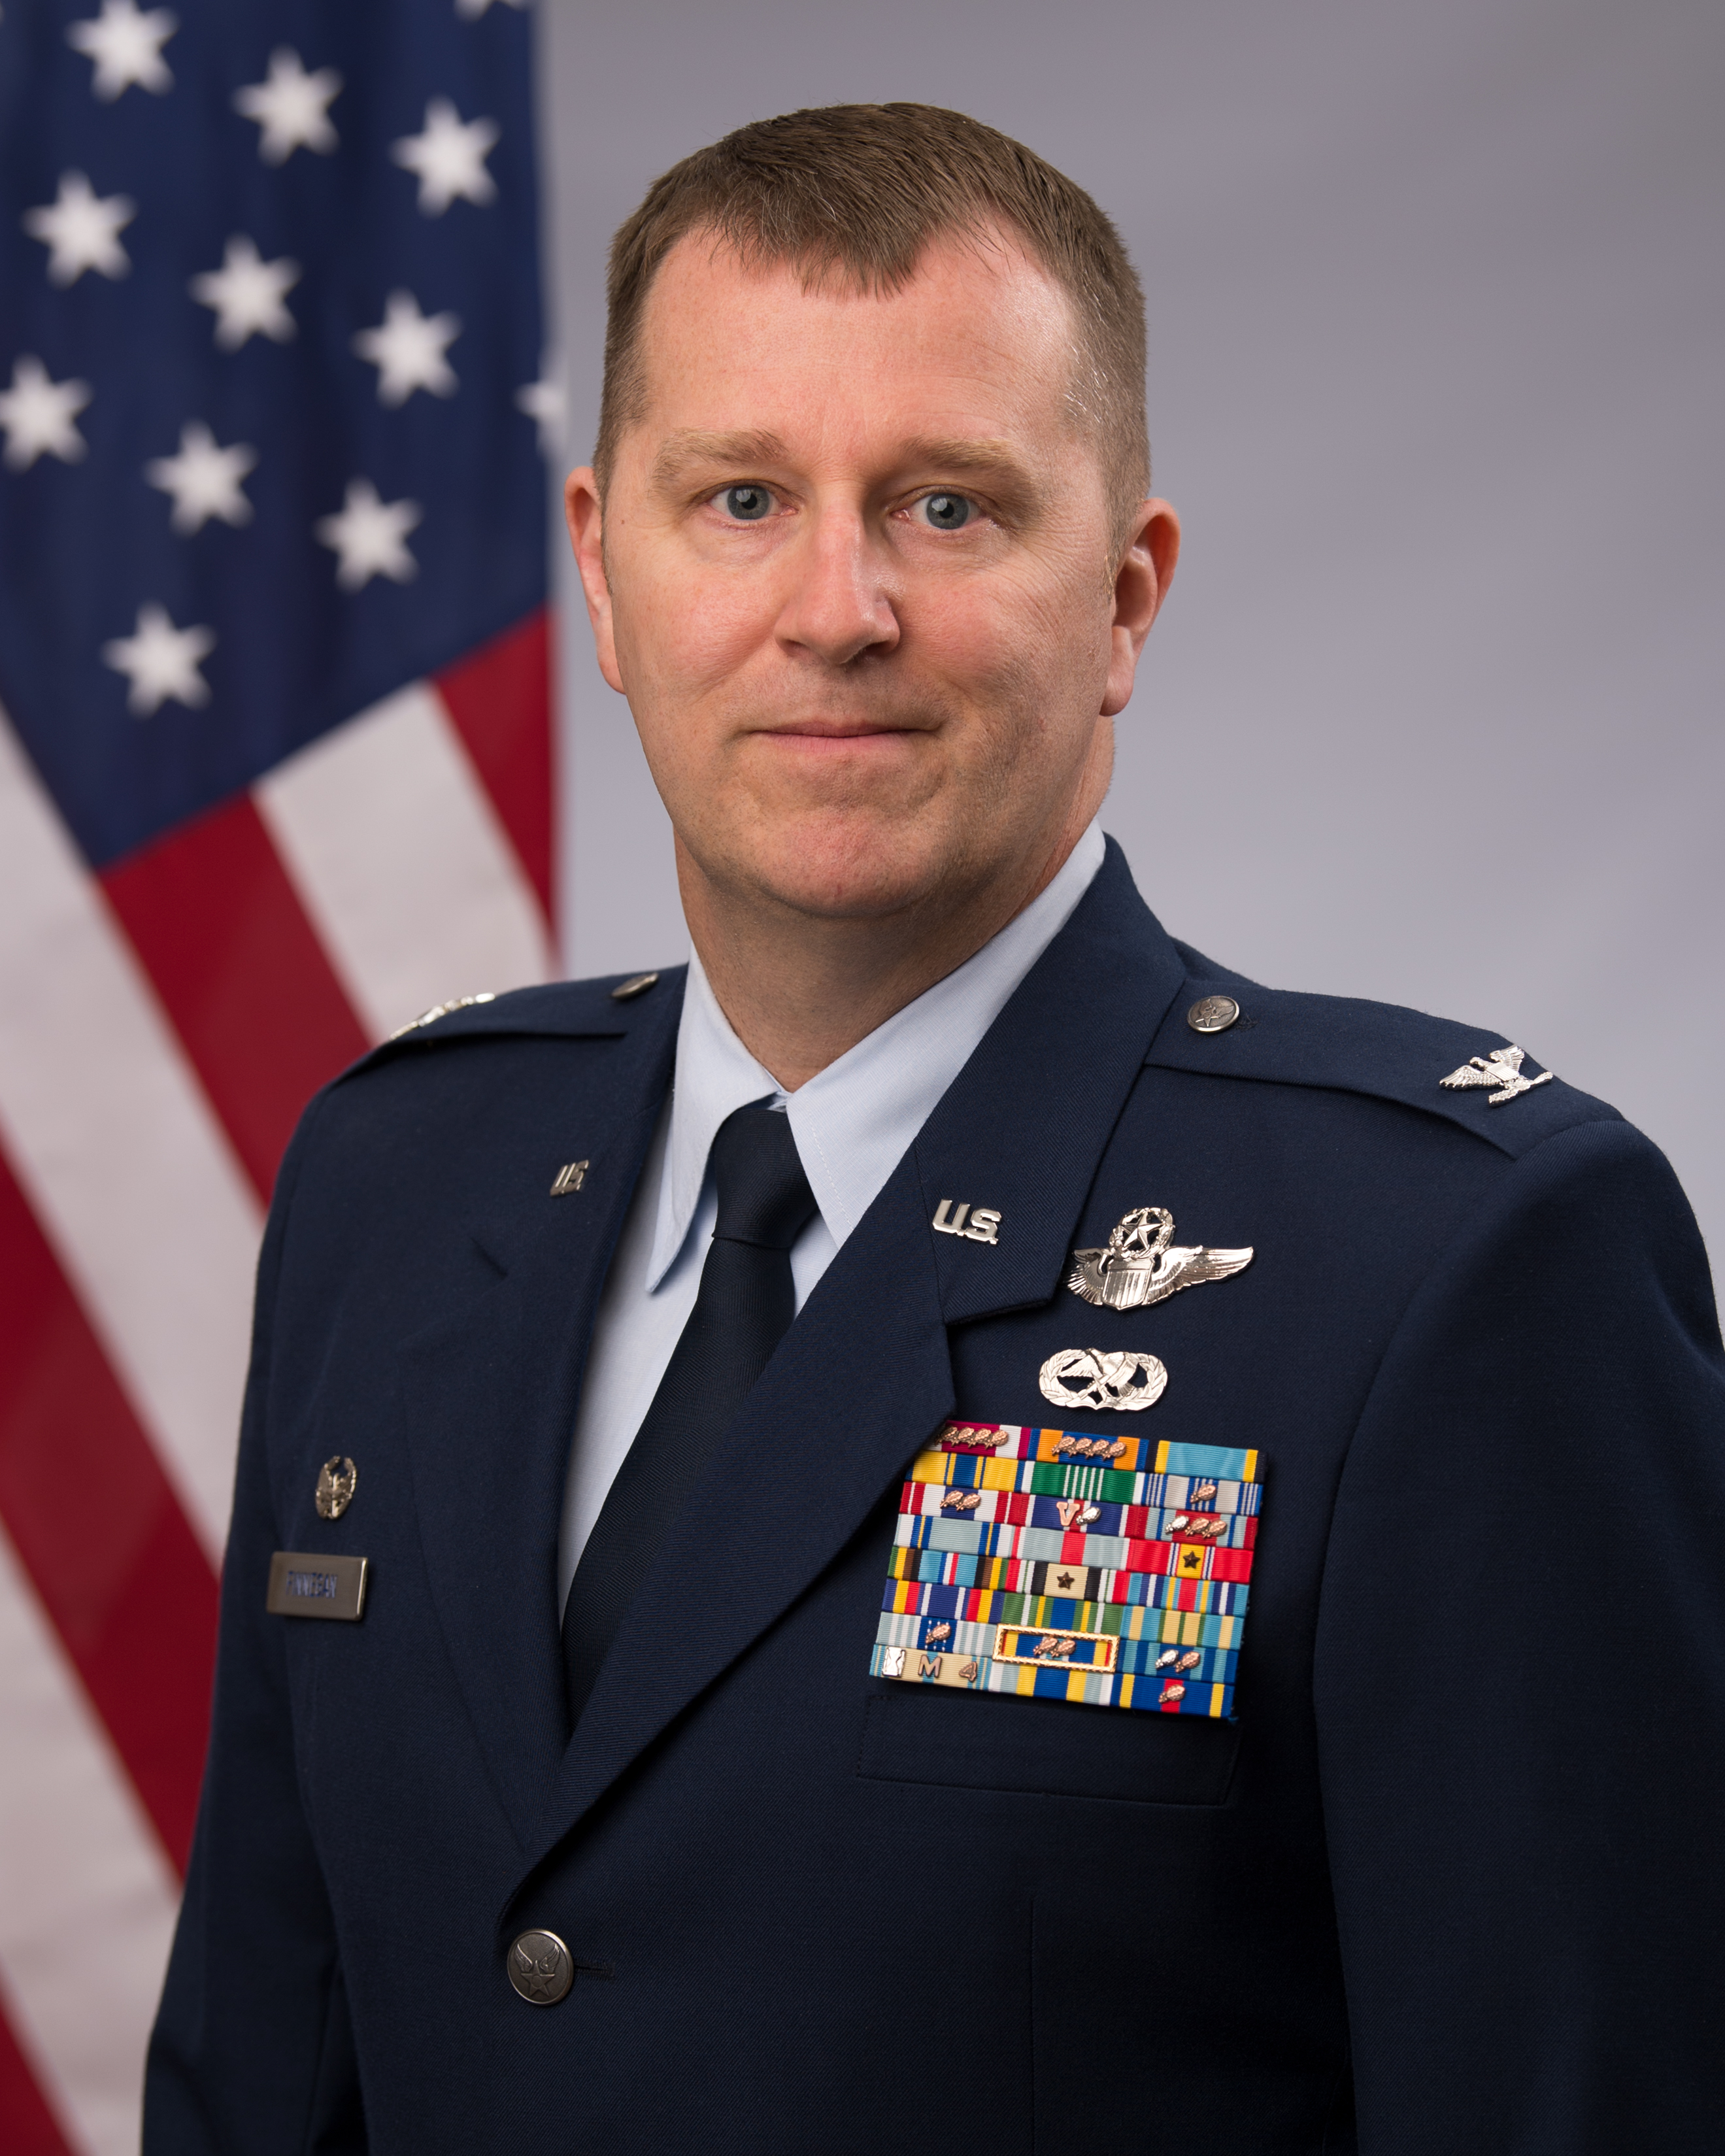 Official portrait of Col. Daniel Finnegan